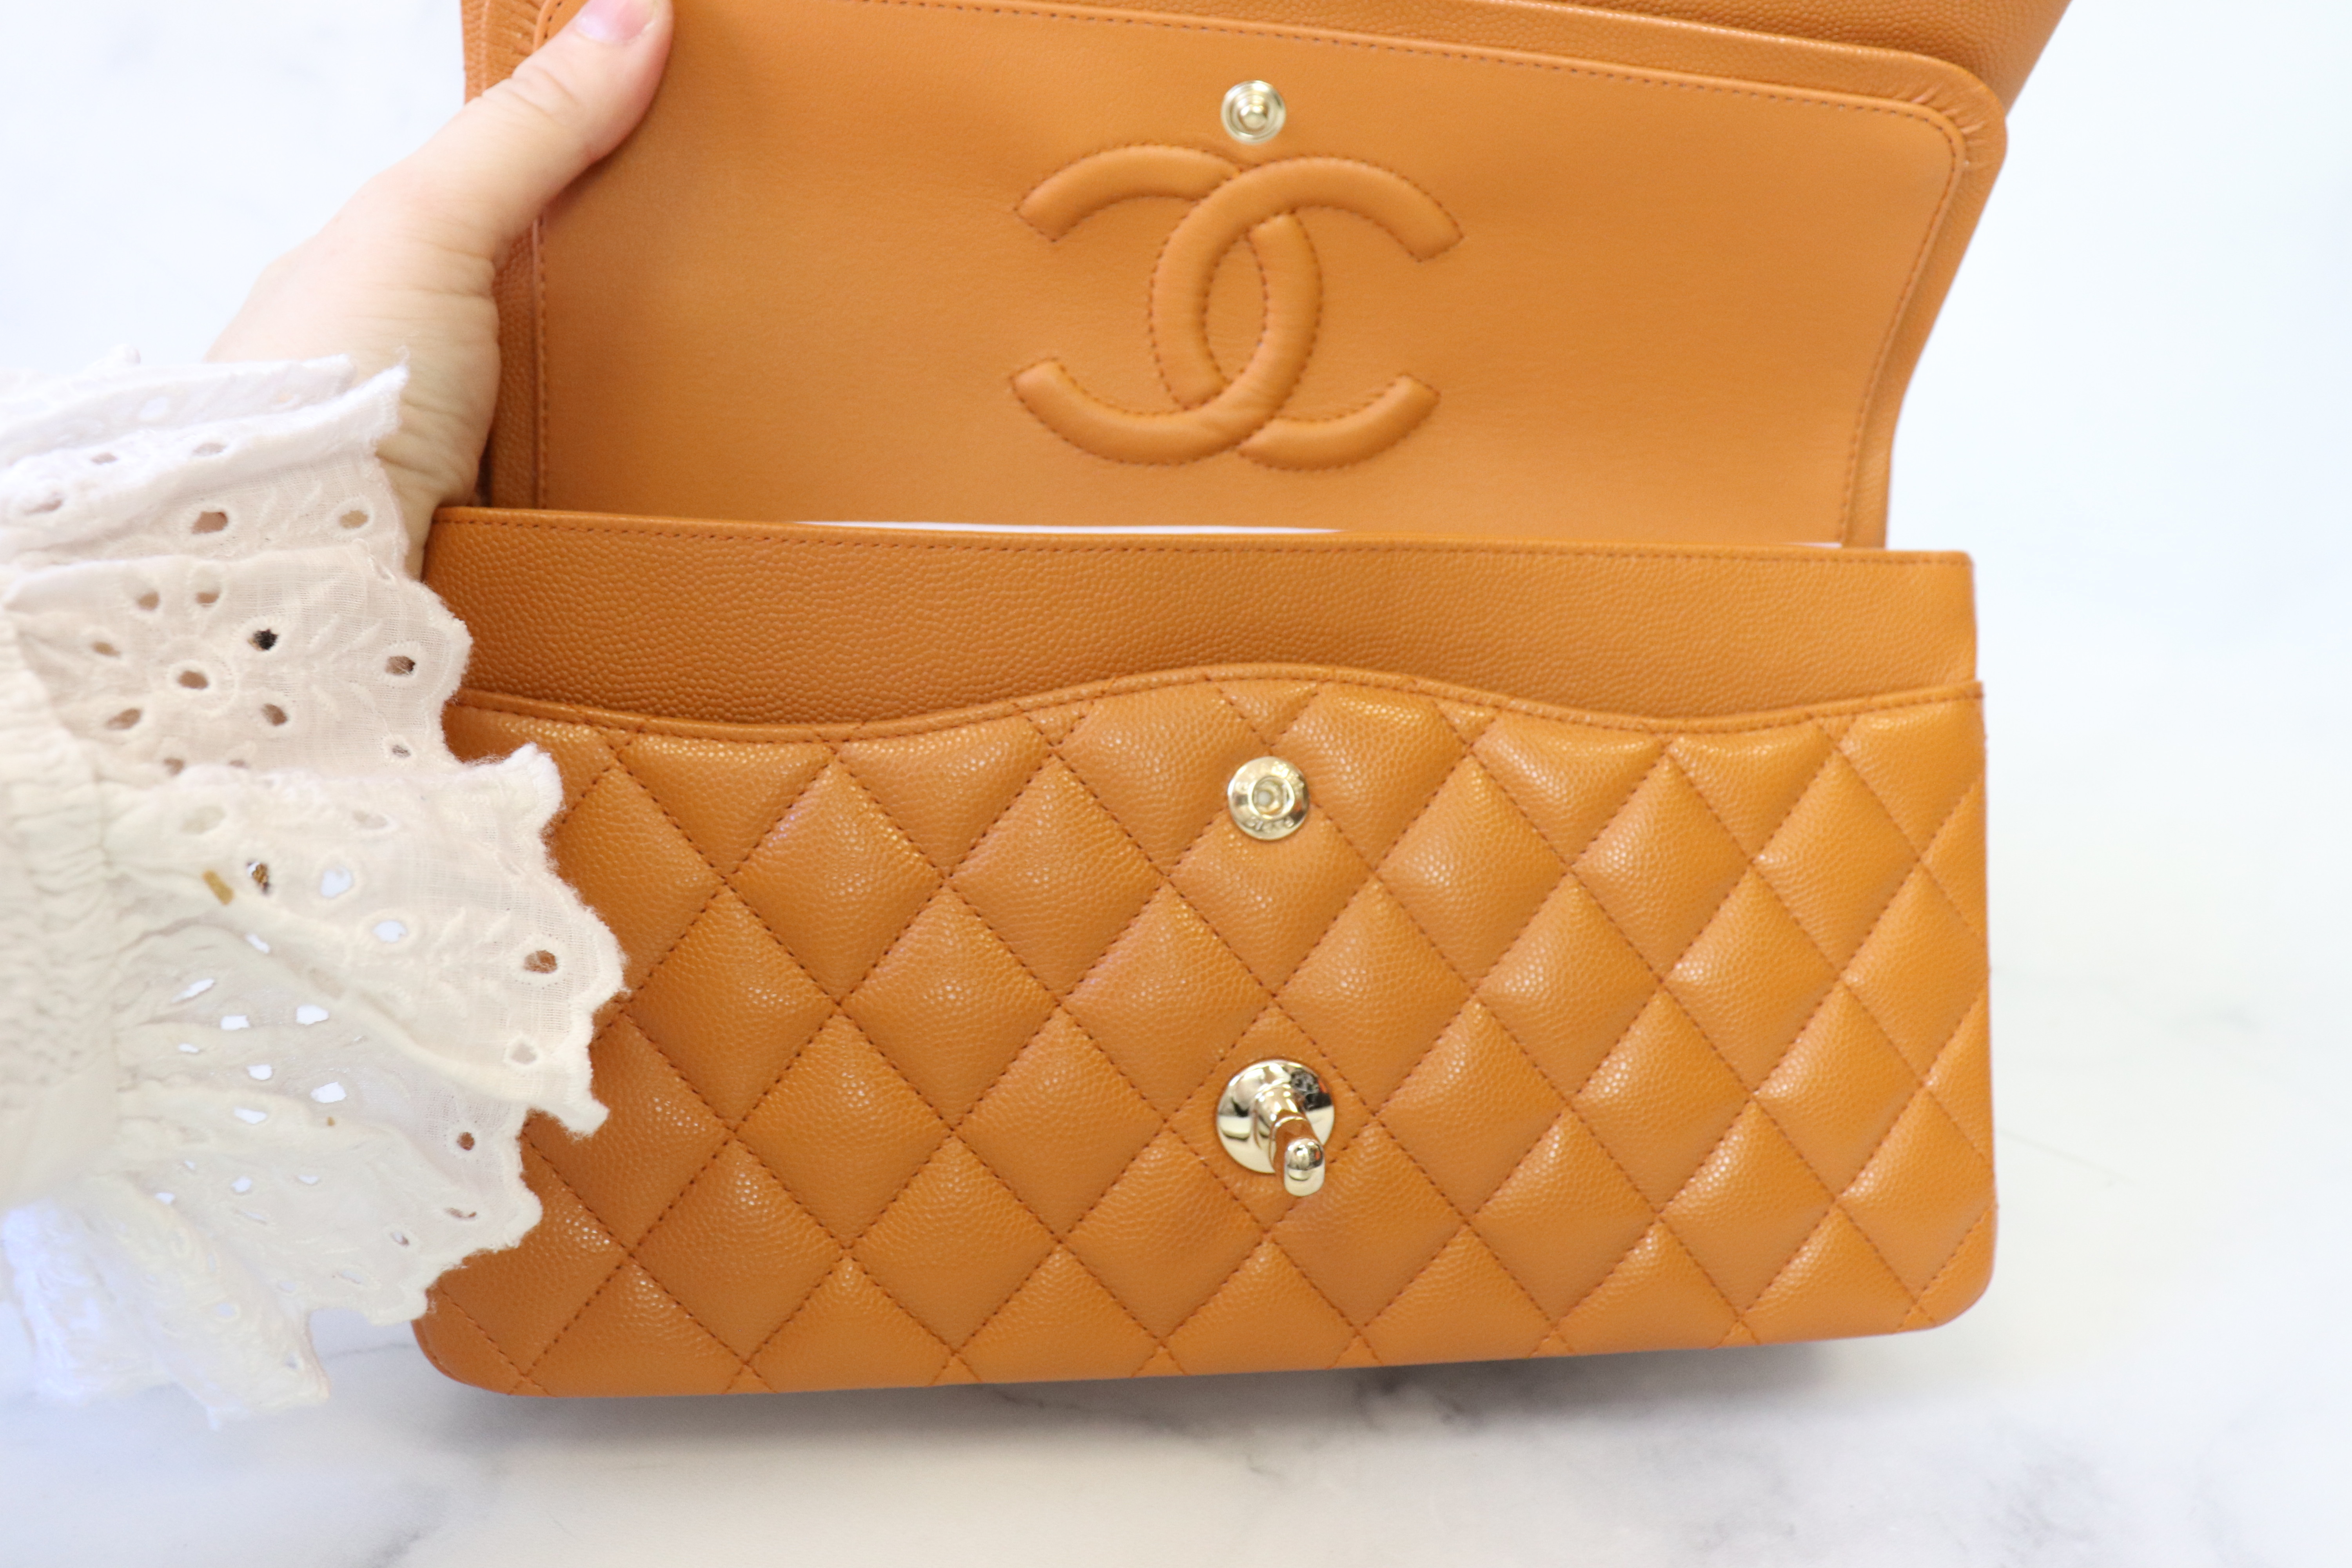 Chanel Classic Medium Double Flap, 21A Brown Caviar Leather, Gold Hardware,  New in Box - Julia Rose Boston